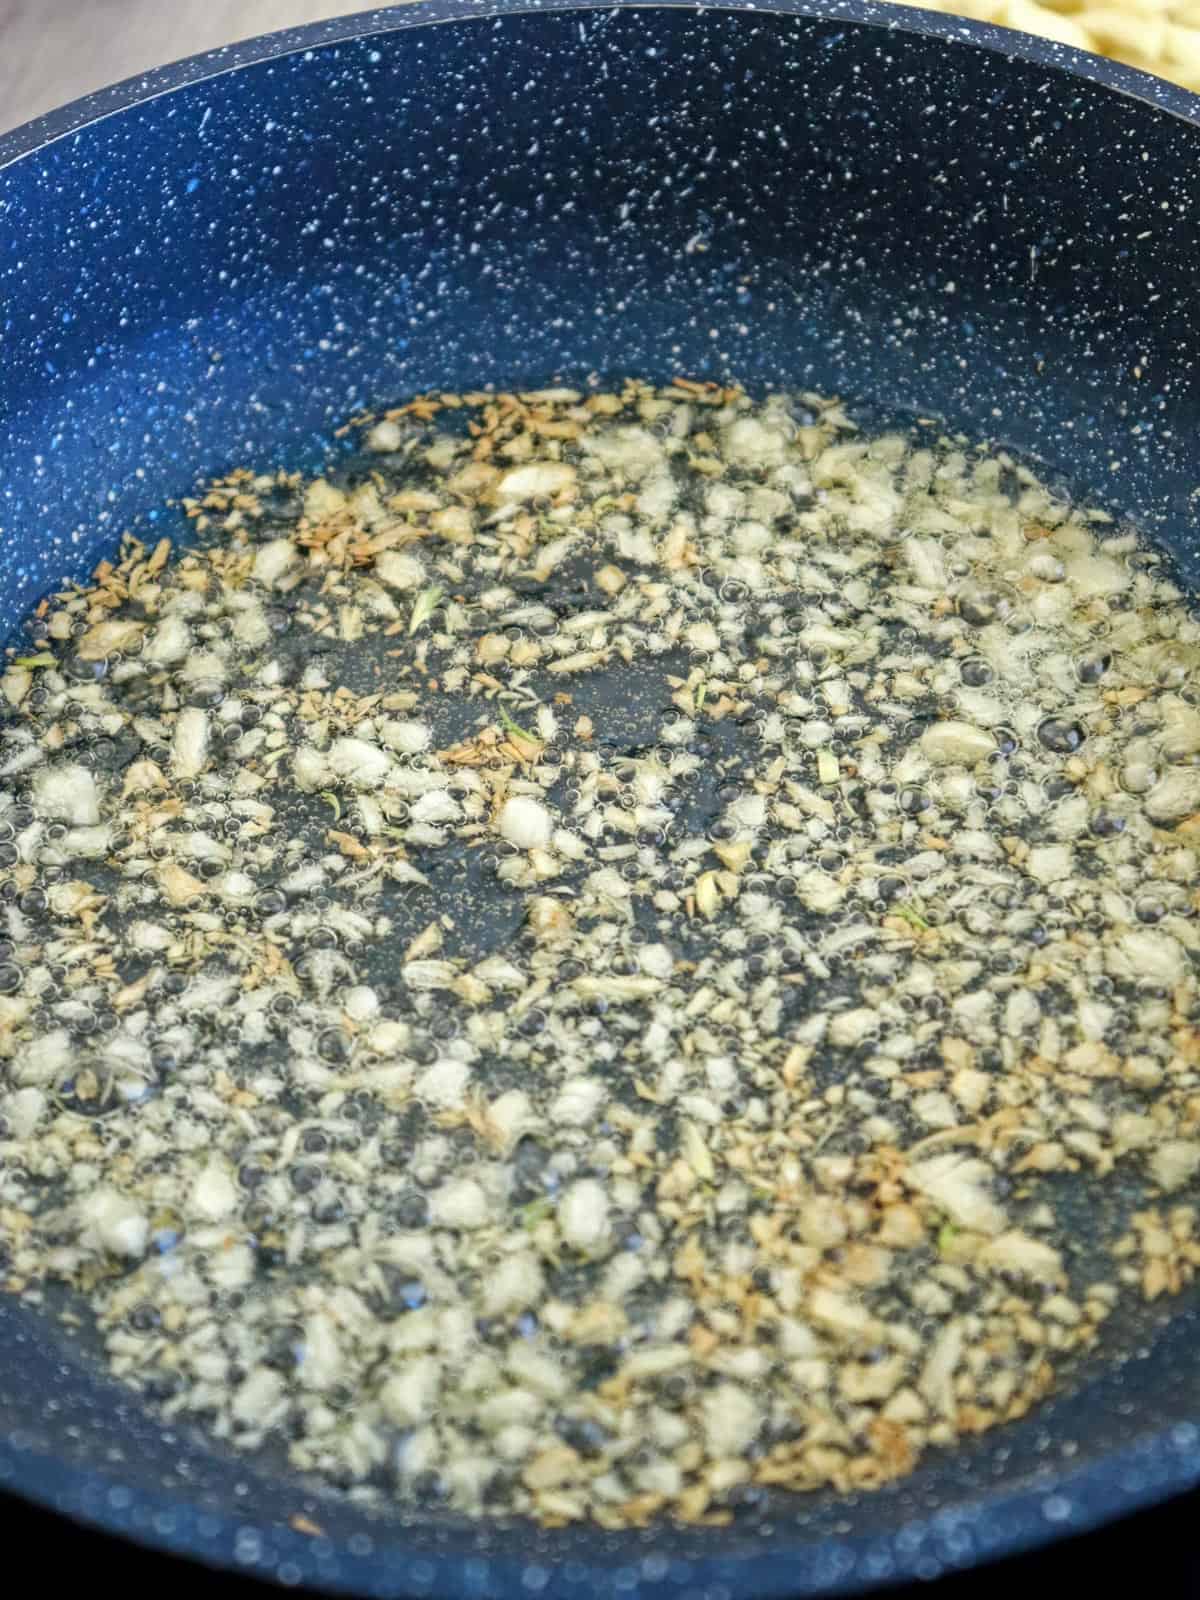 frying garlic bits in oil in a pan